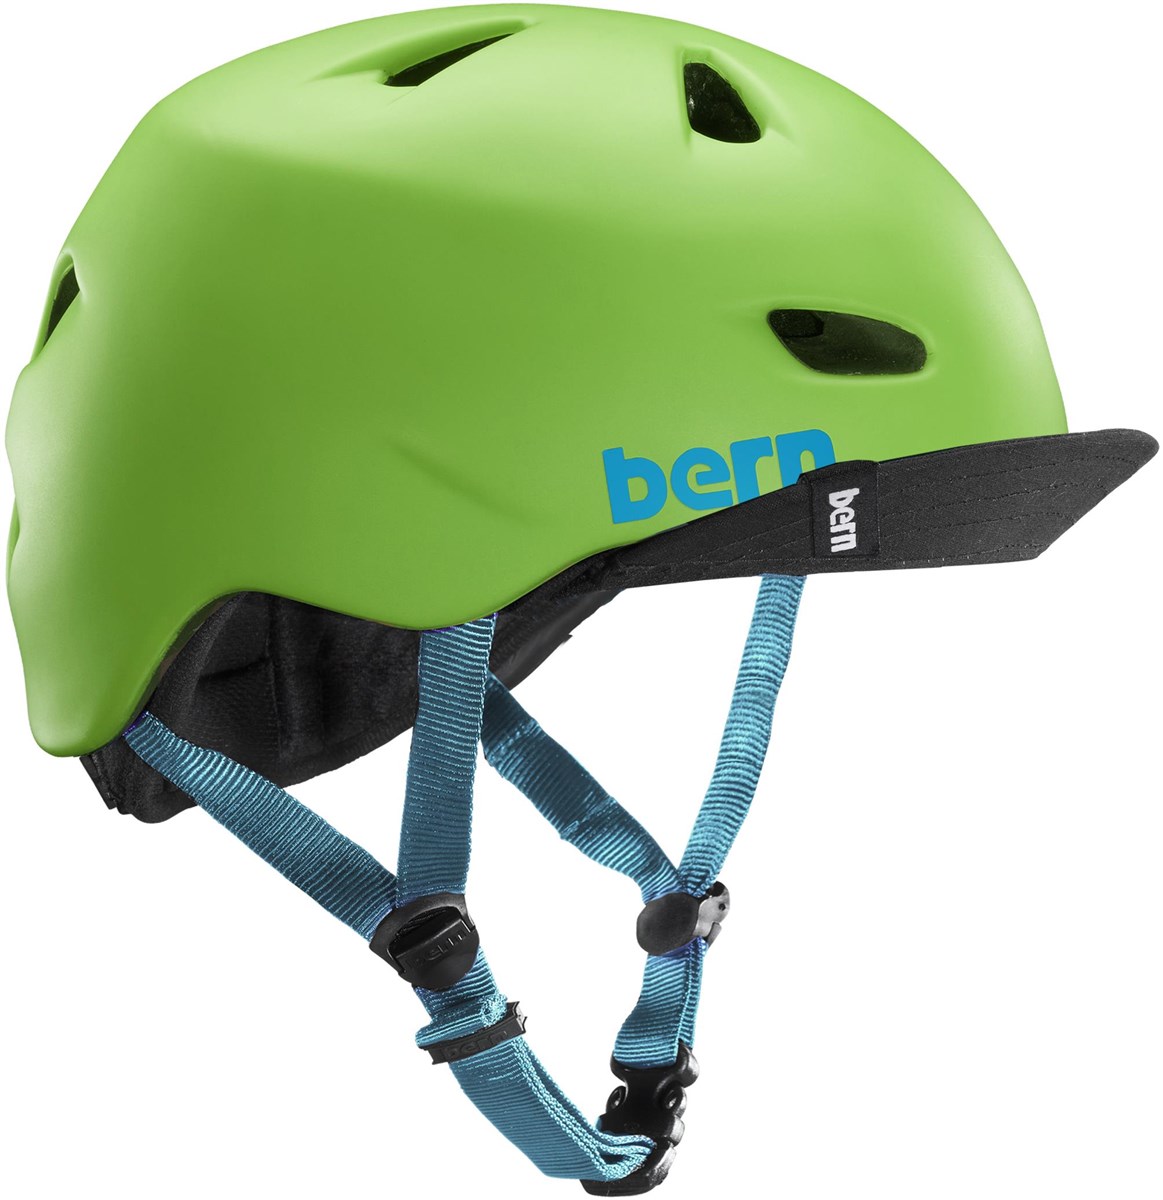 Bern Brentwood Zipmold Cycling Helmet with Flip Visor